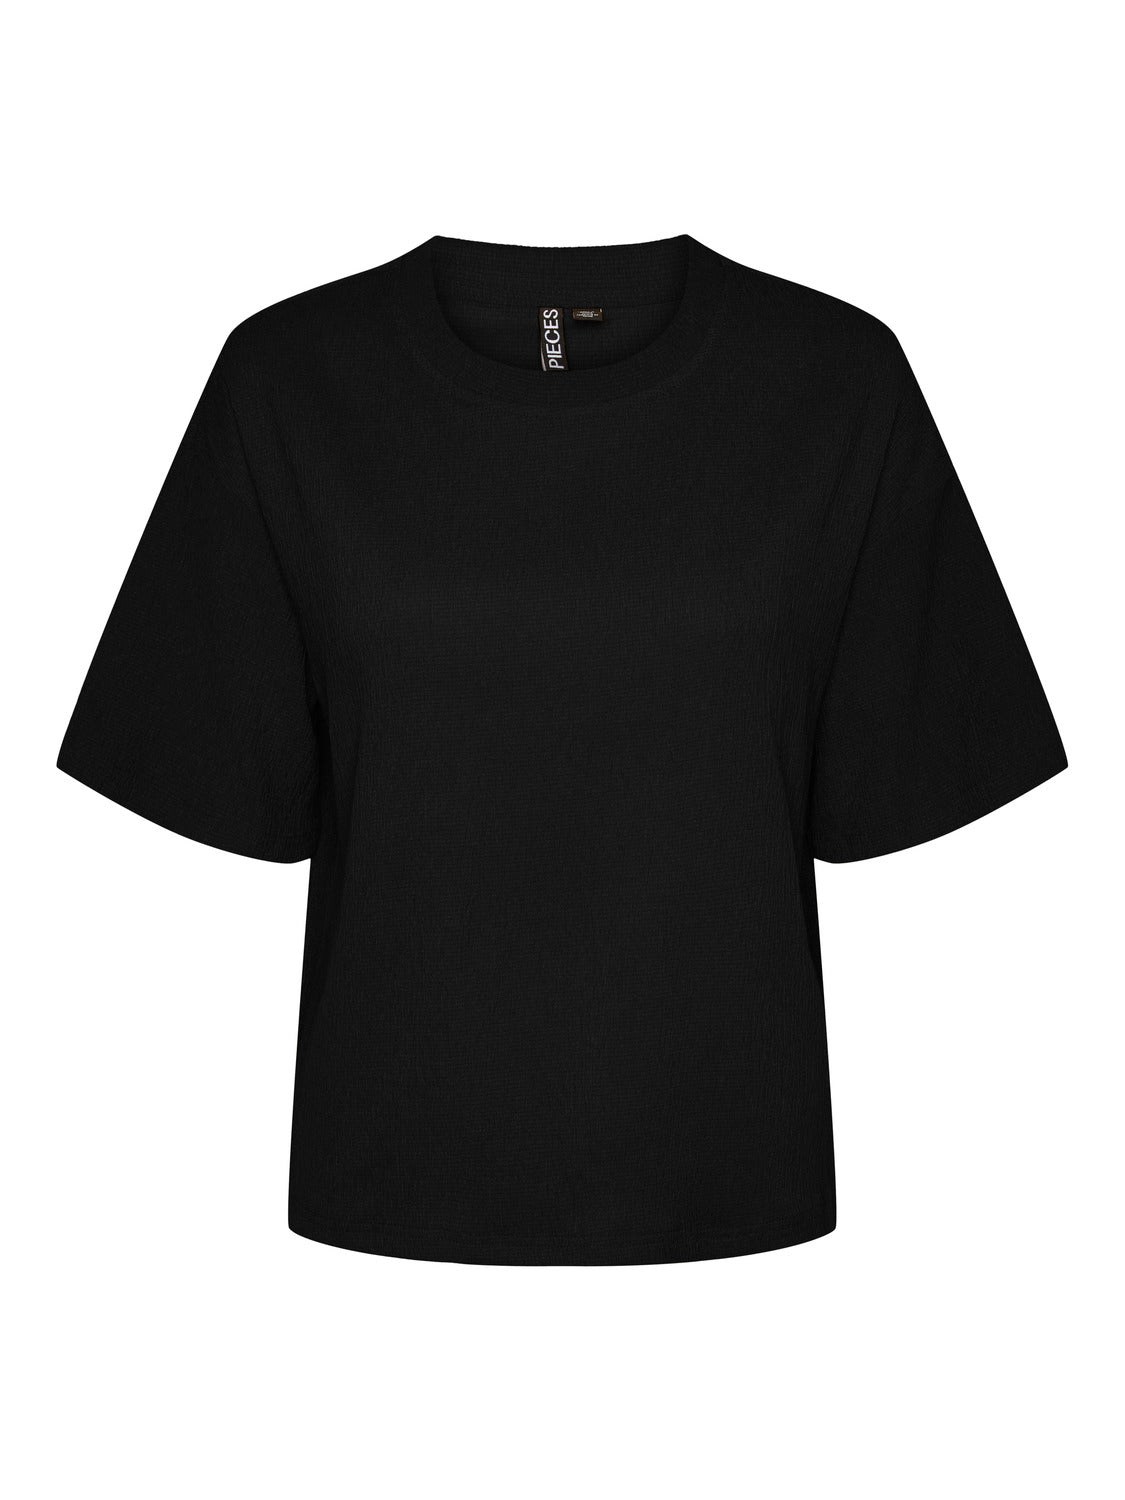 PCLUNA T-Shirt - Black